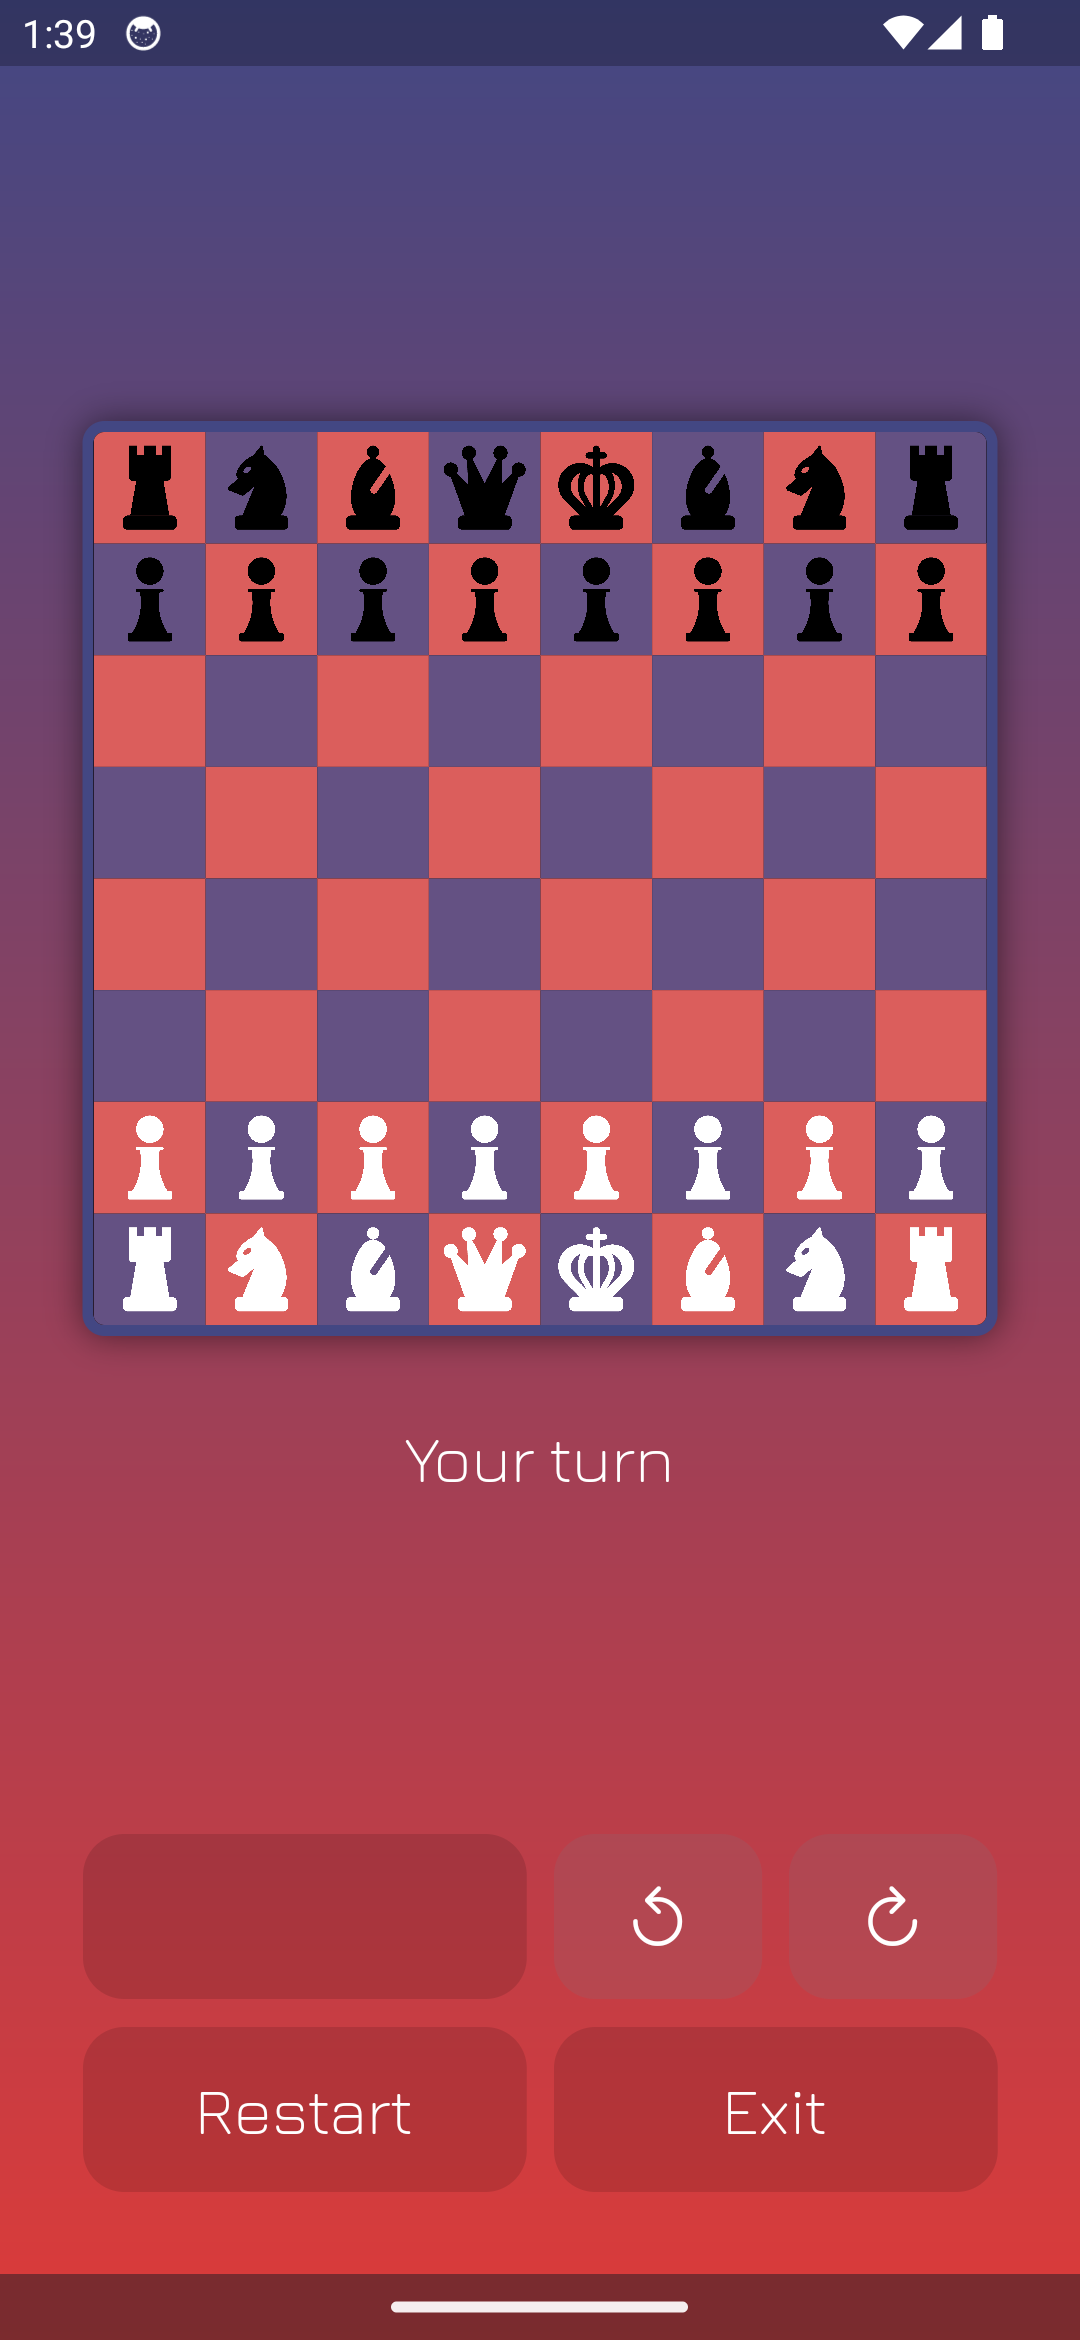 Chess - Offline 2 Playerのキャプチャ